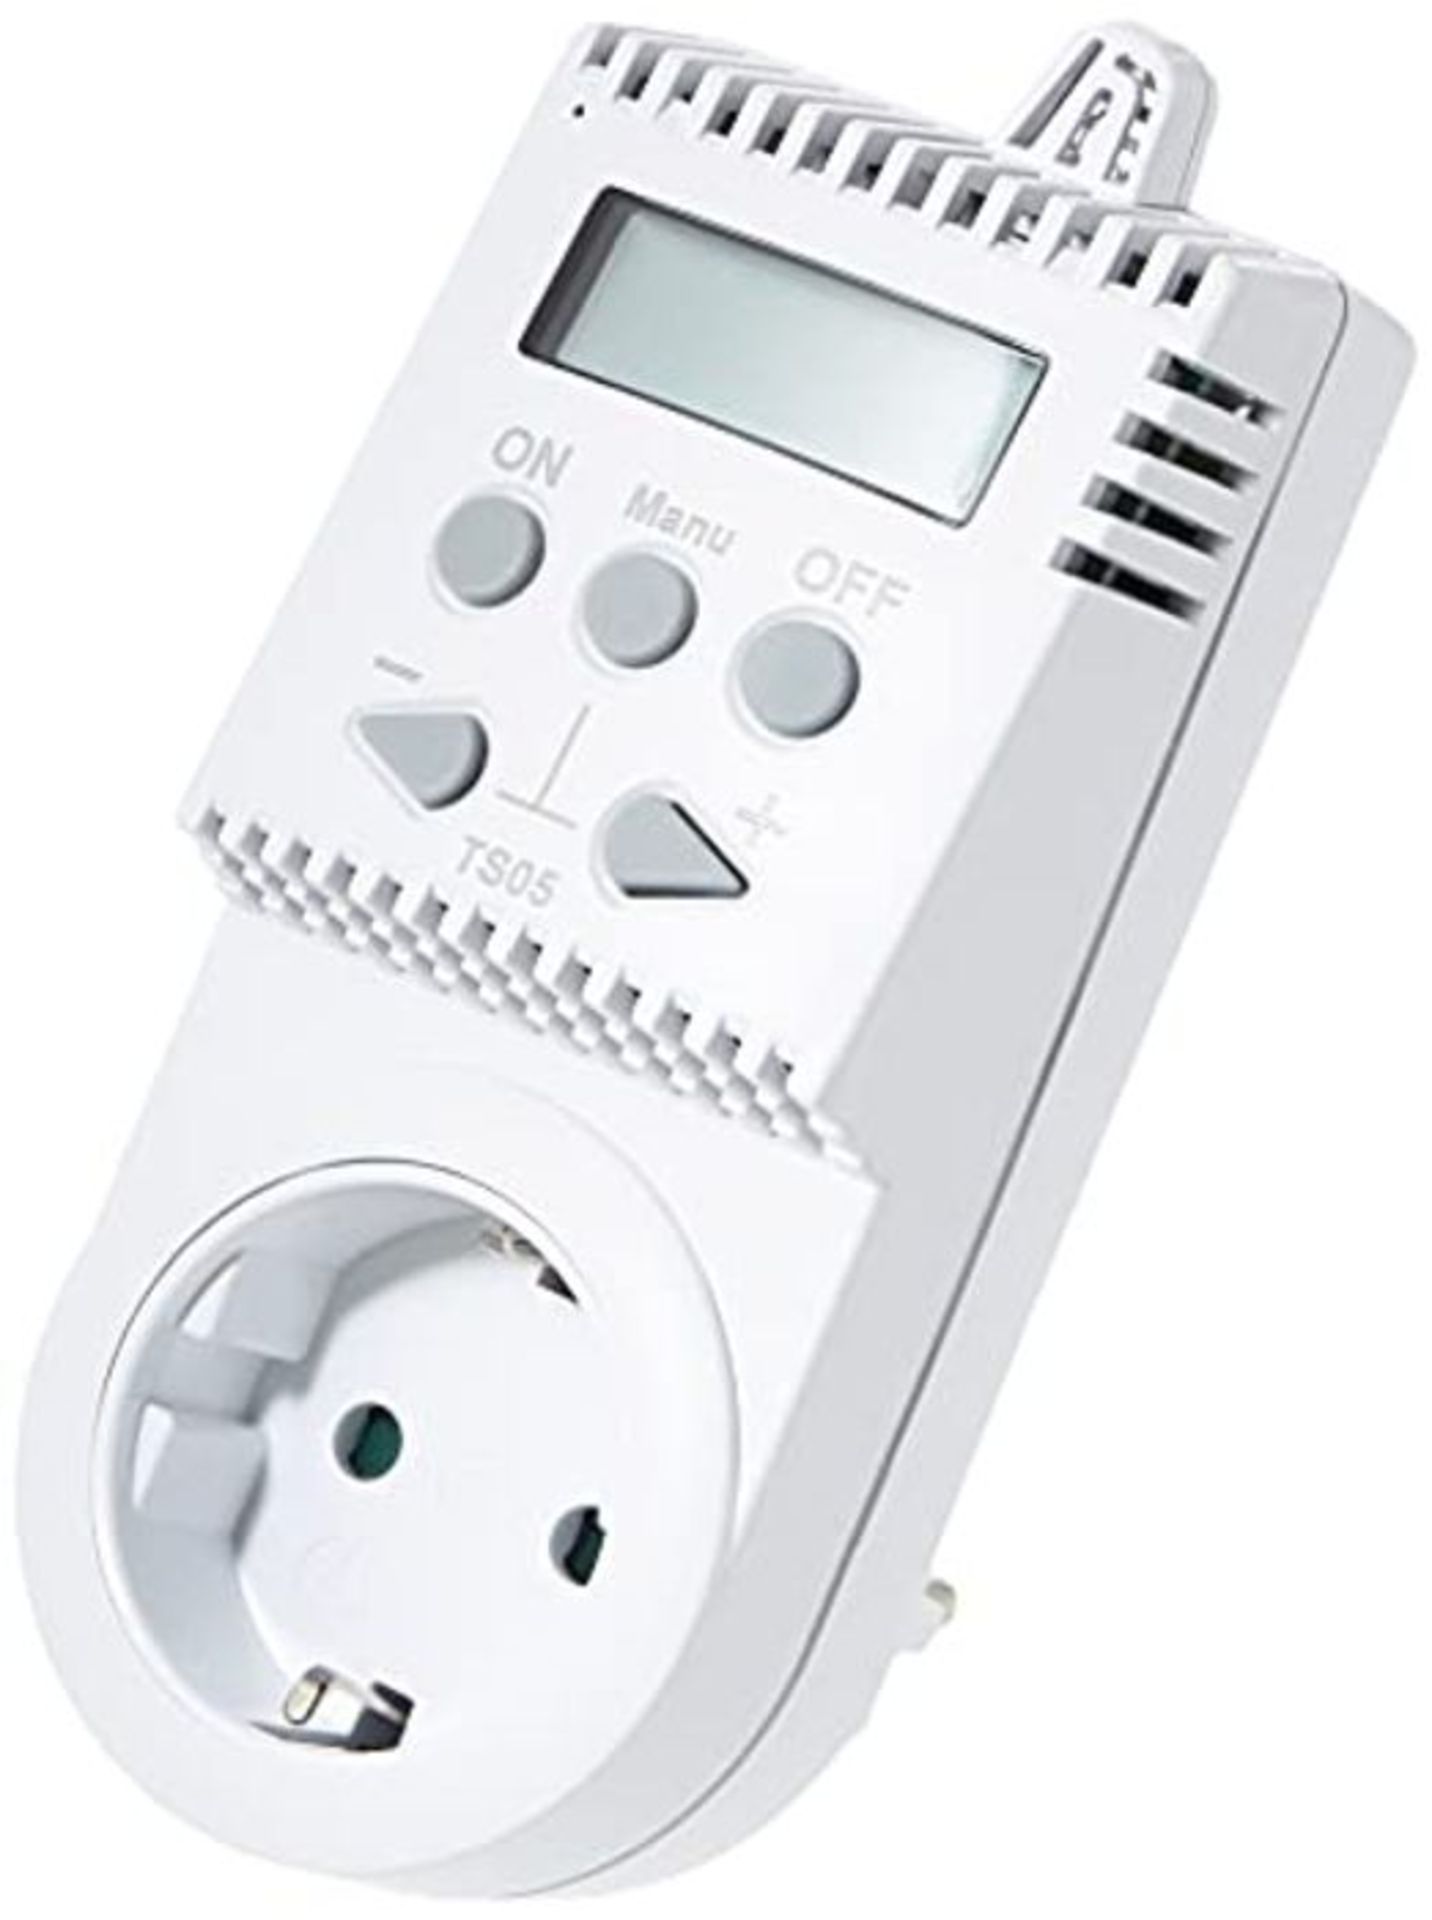 Elektrobock, Plug Thermostat TS05, Thermostat Infrared Heating.